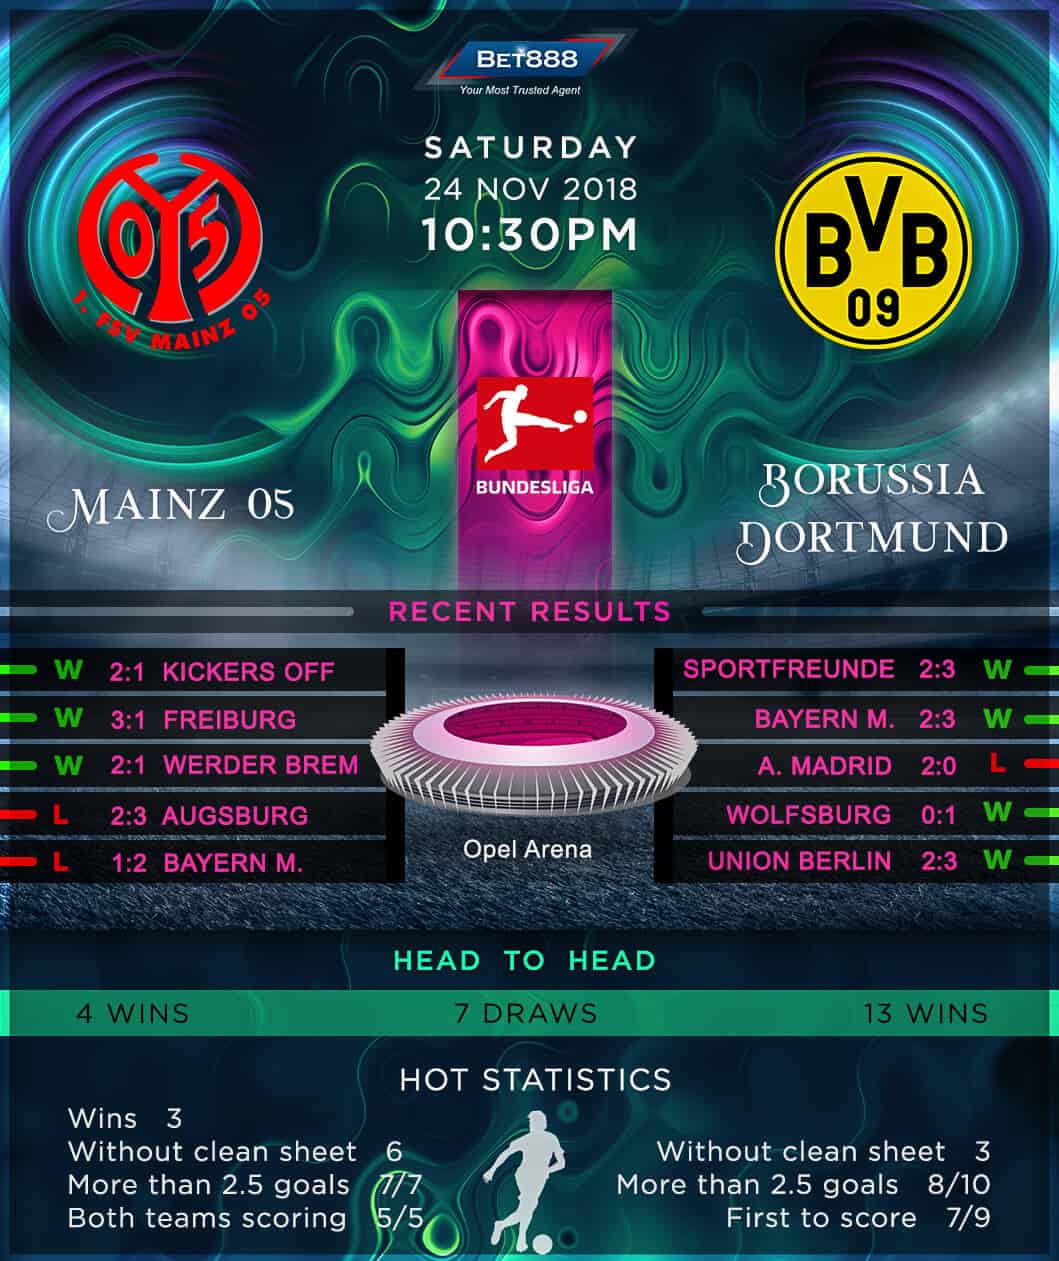 Mainz 05 vs Borussia Dortmund 24/11/18